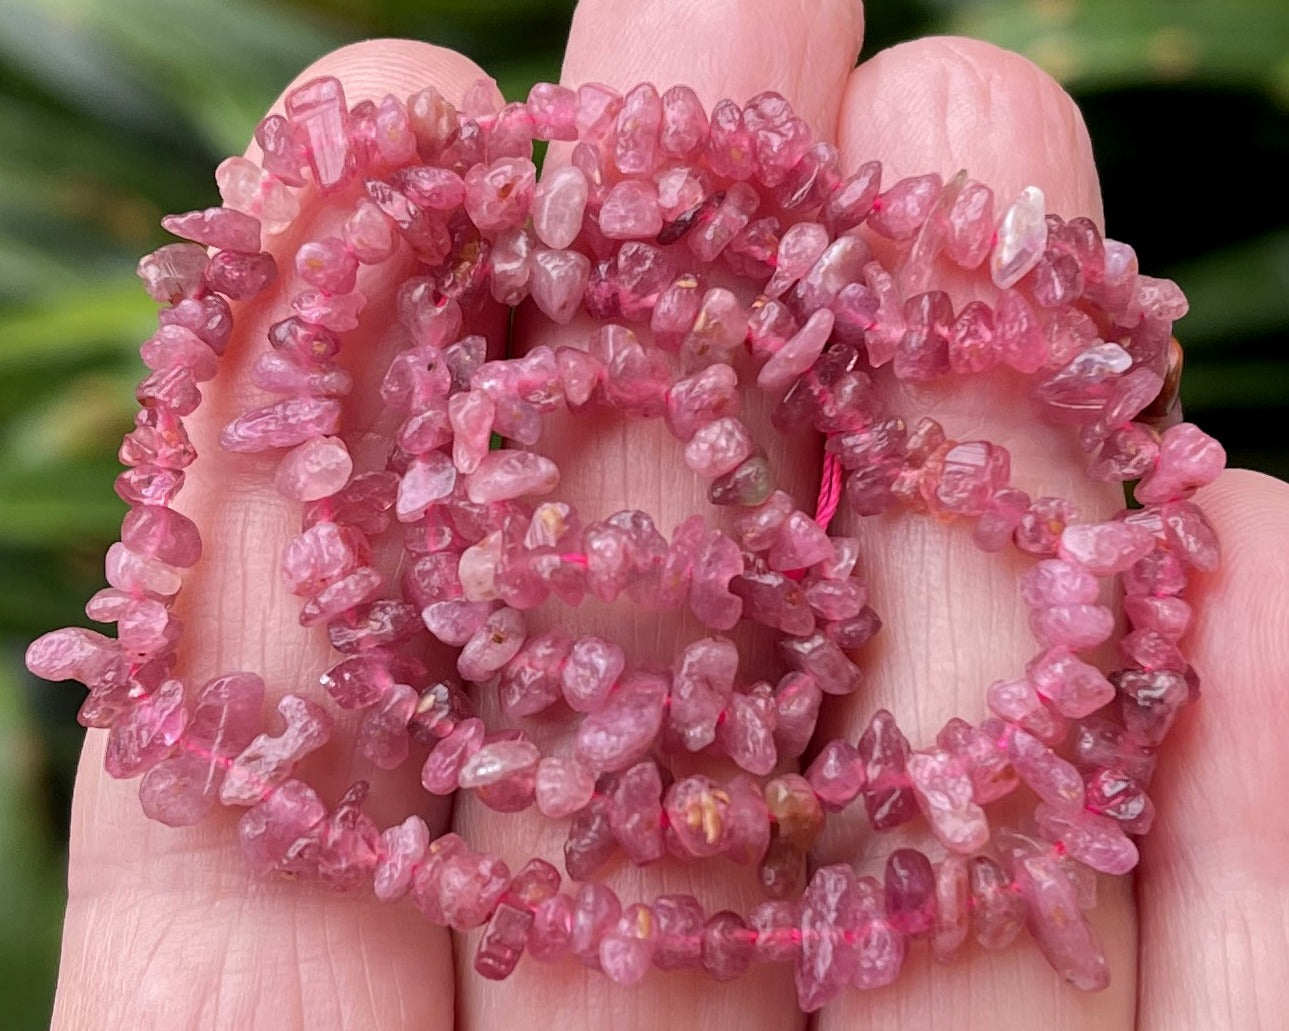 Pink Tourmaline 3-6mm tiny chip beads natural gemstone chips 16" strand